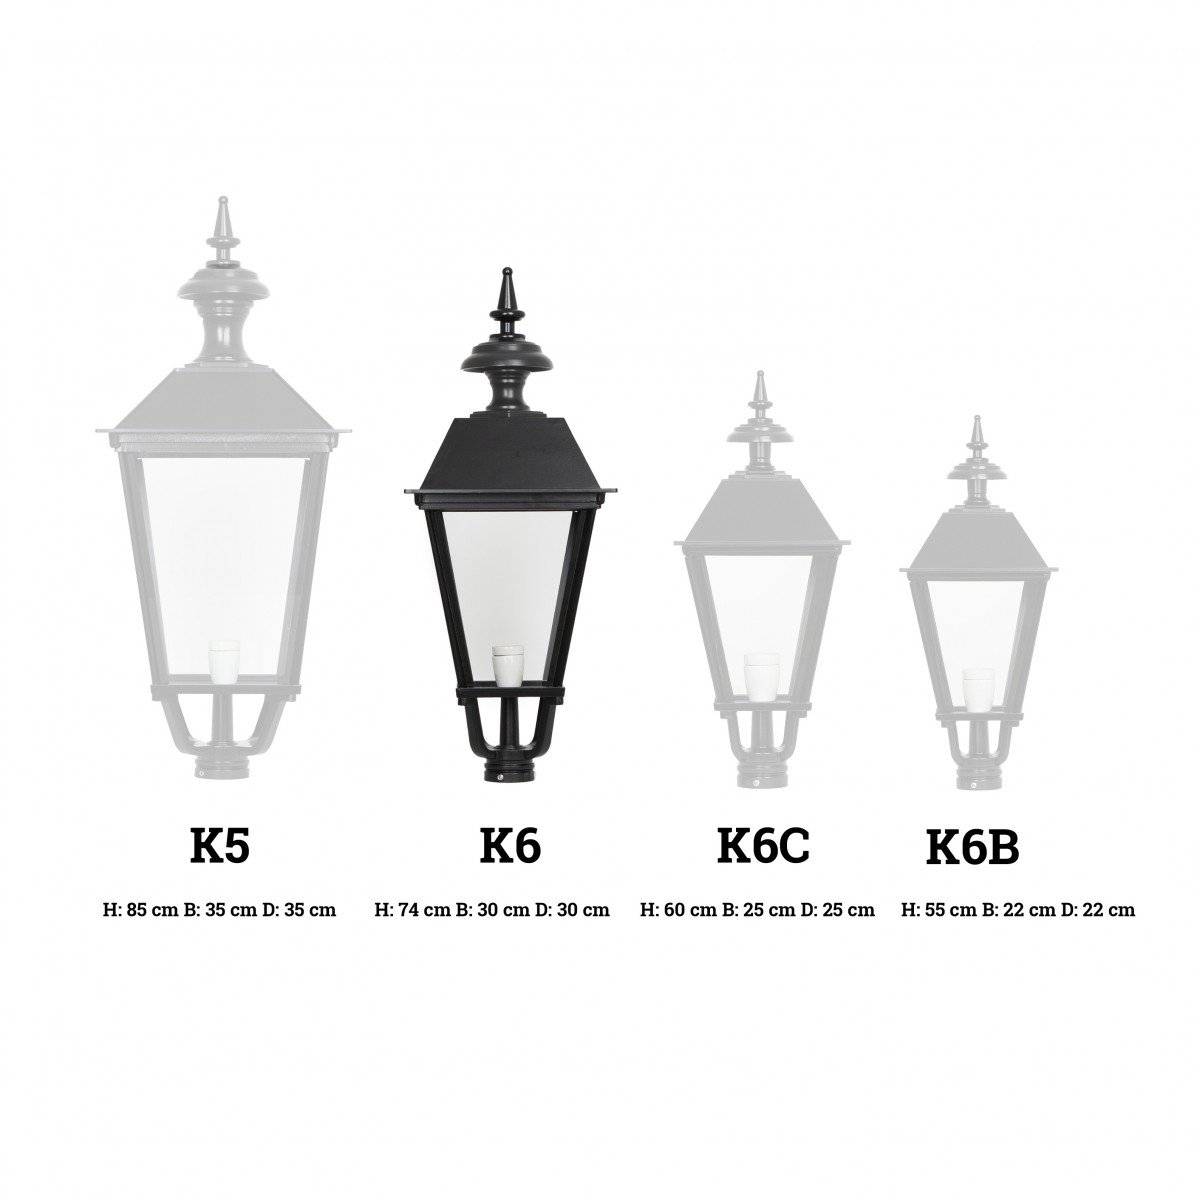 K6 post lantern